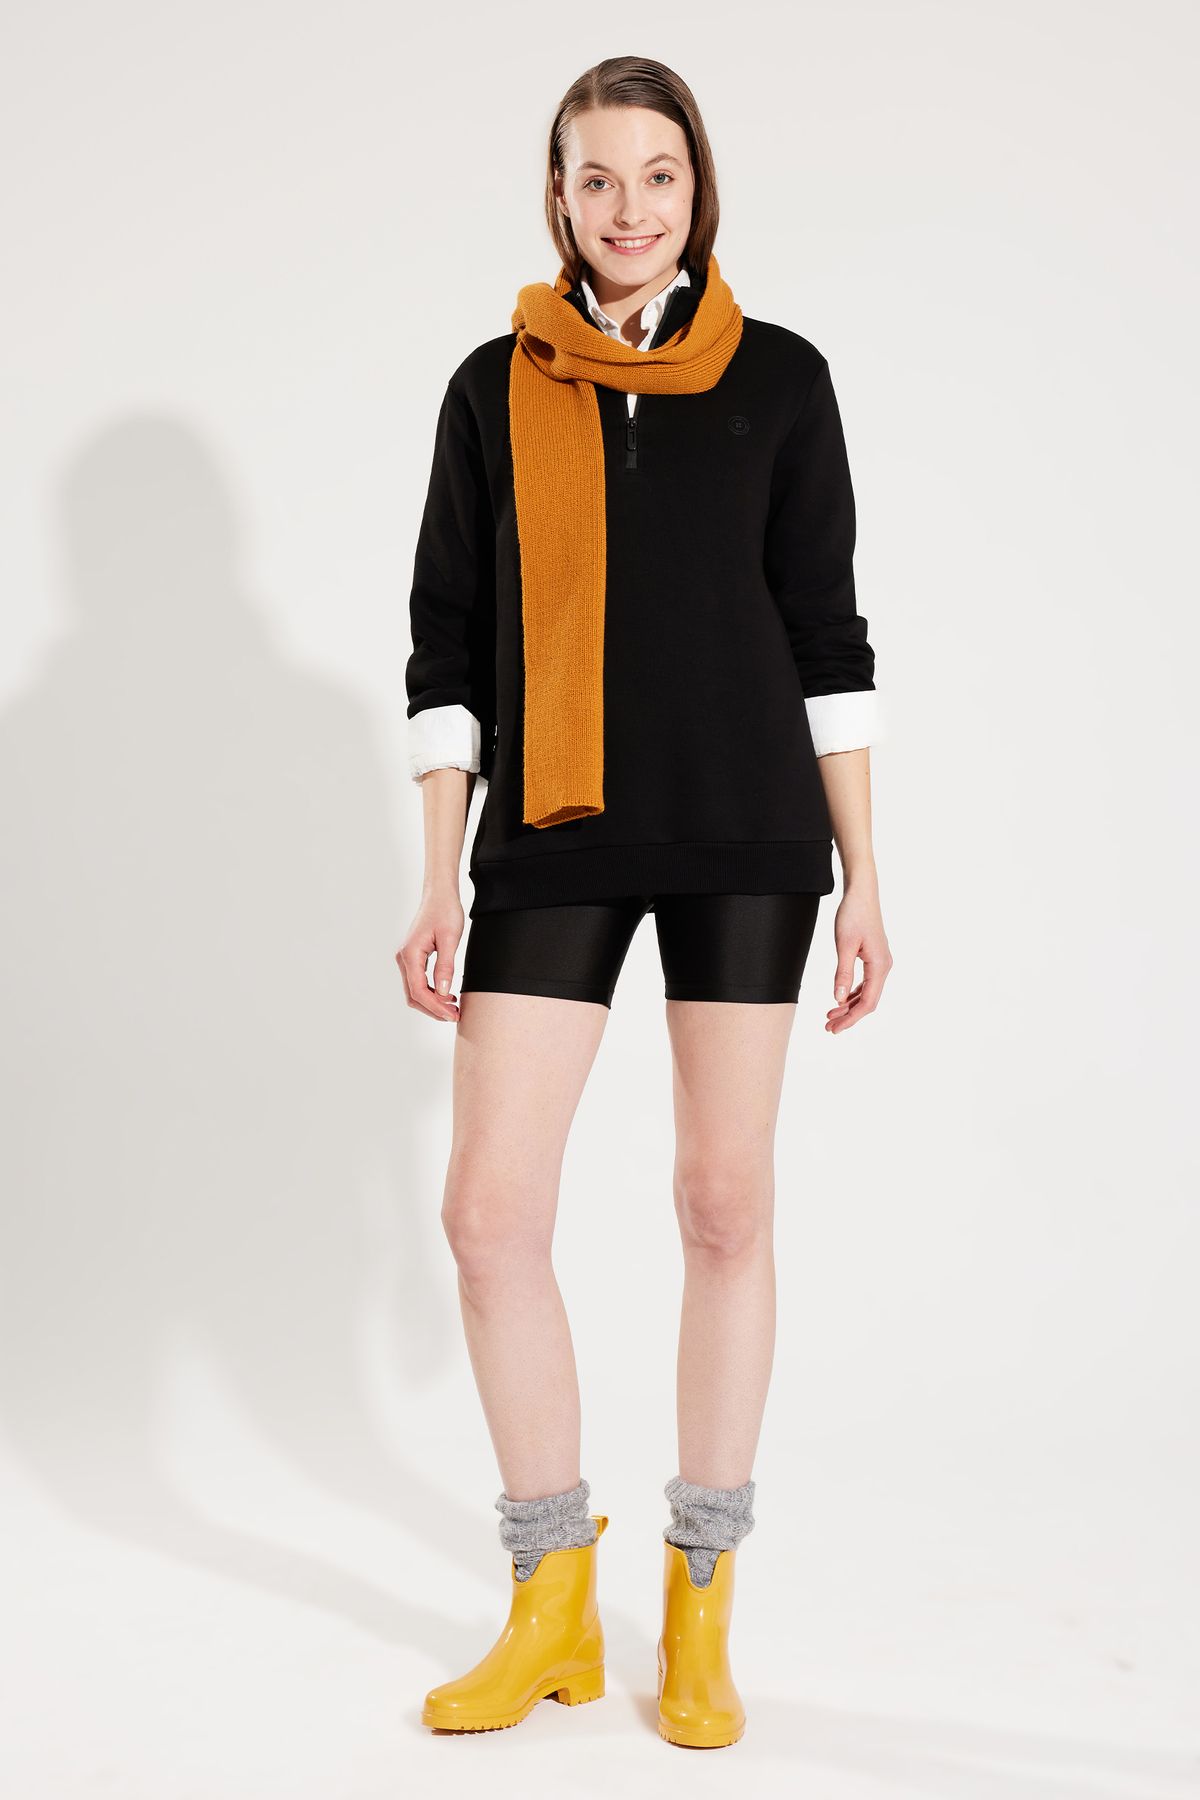 Avva Black Unisex Sweatshirt Stand Collar Zippered Fleece Inside 3 Thread Regular Fit